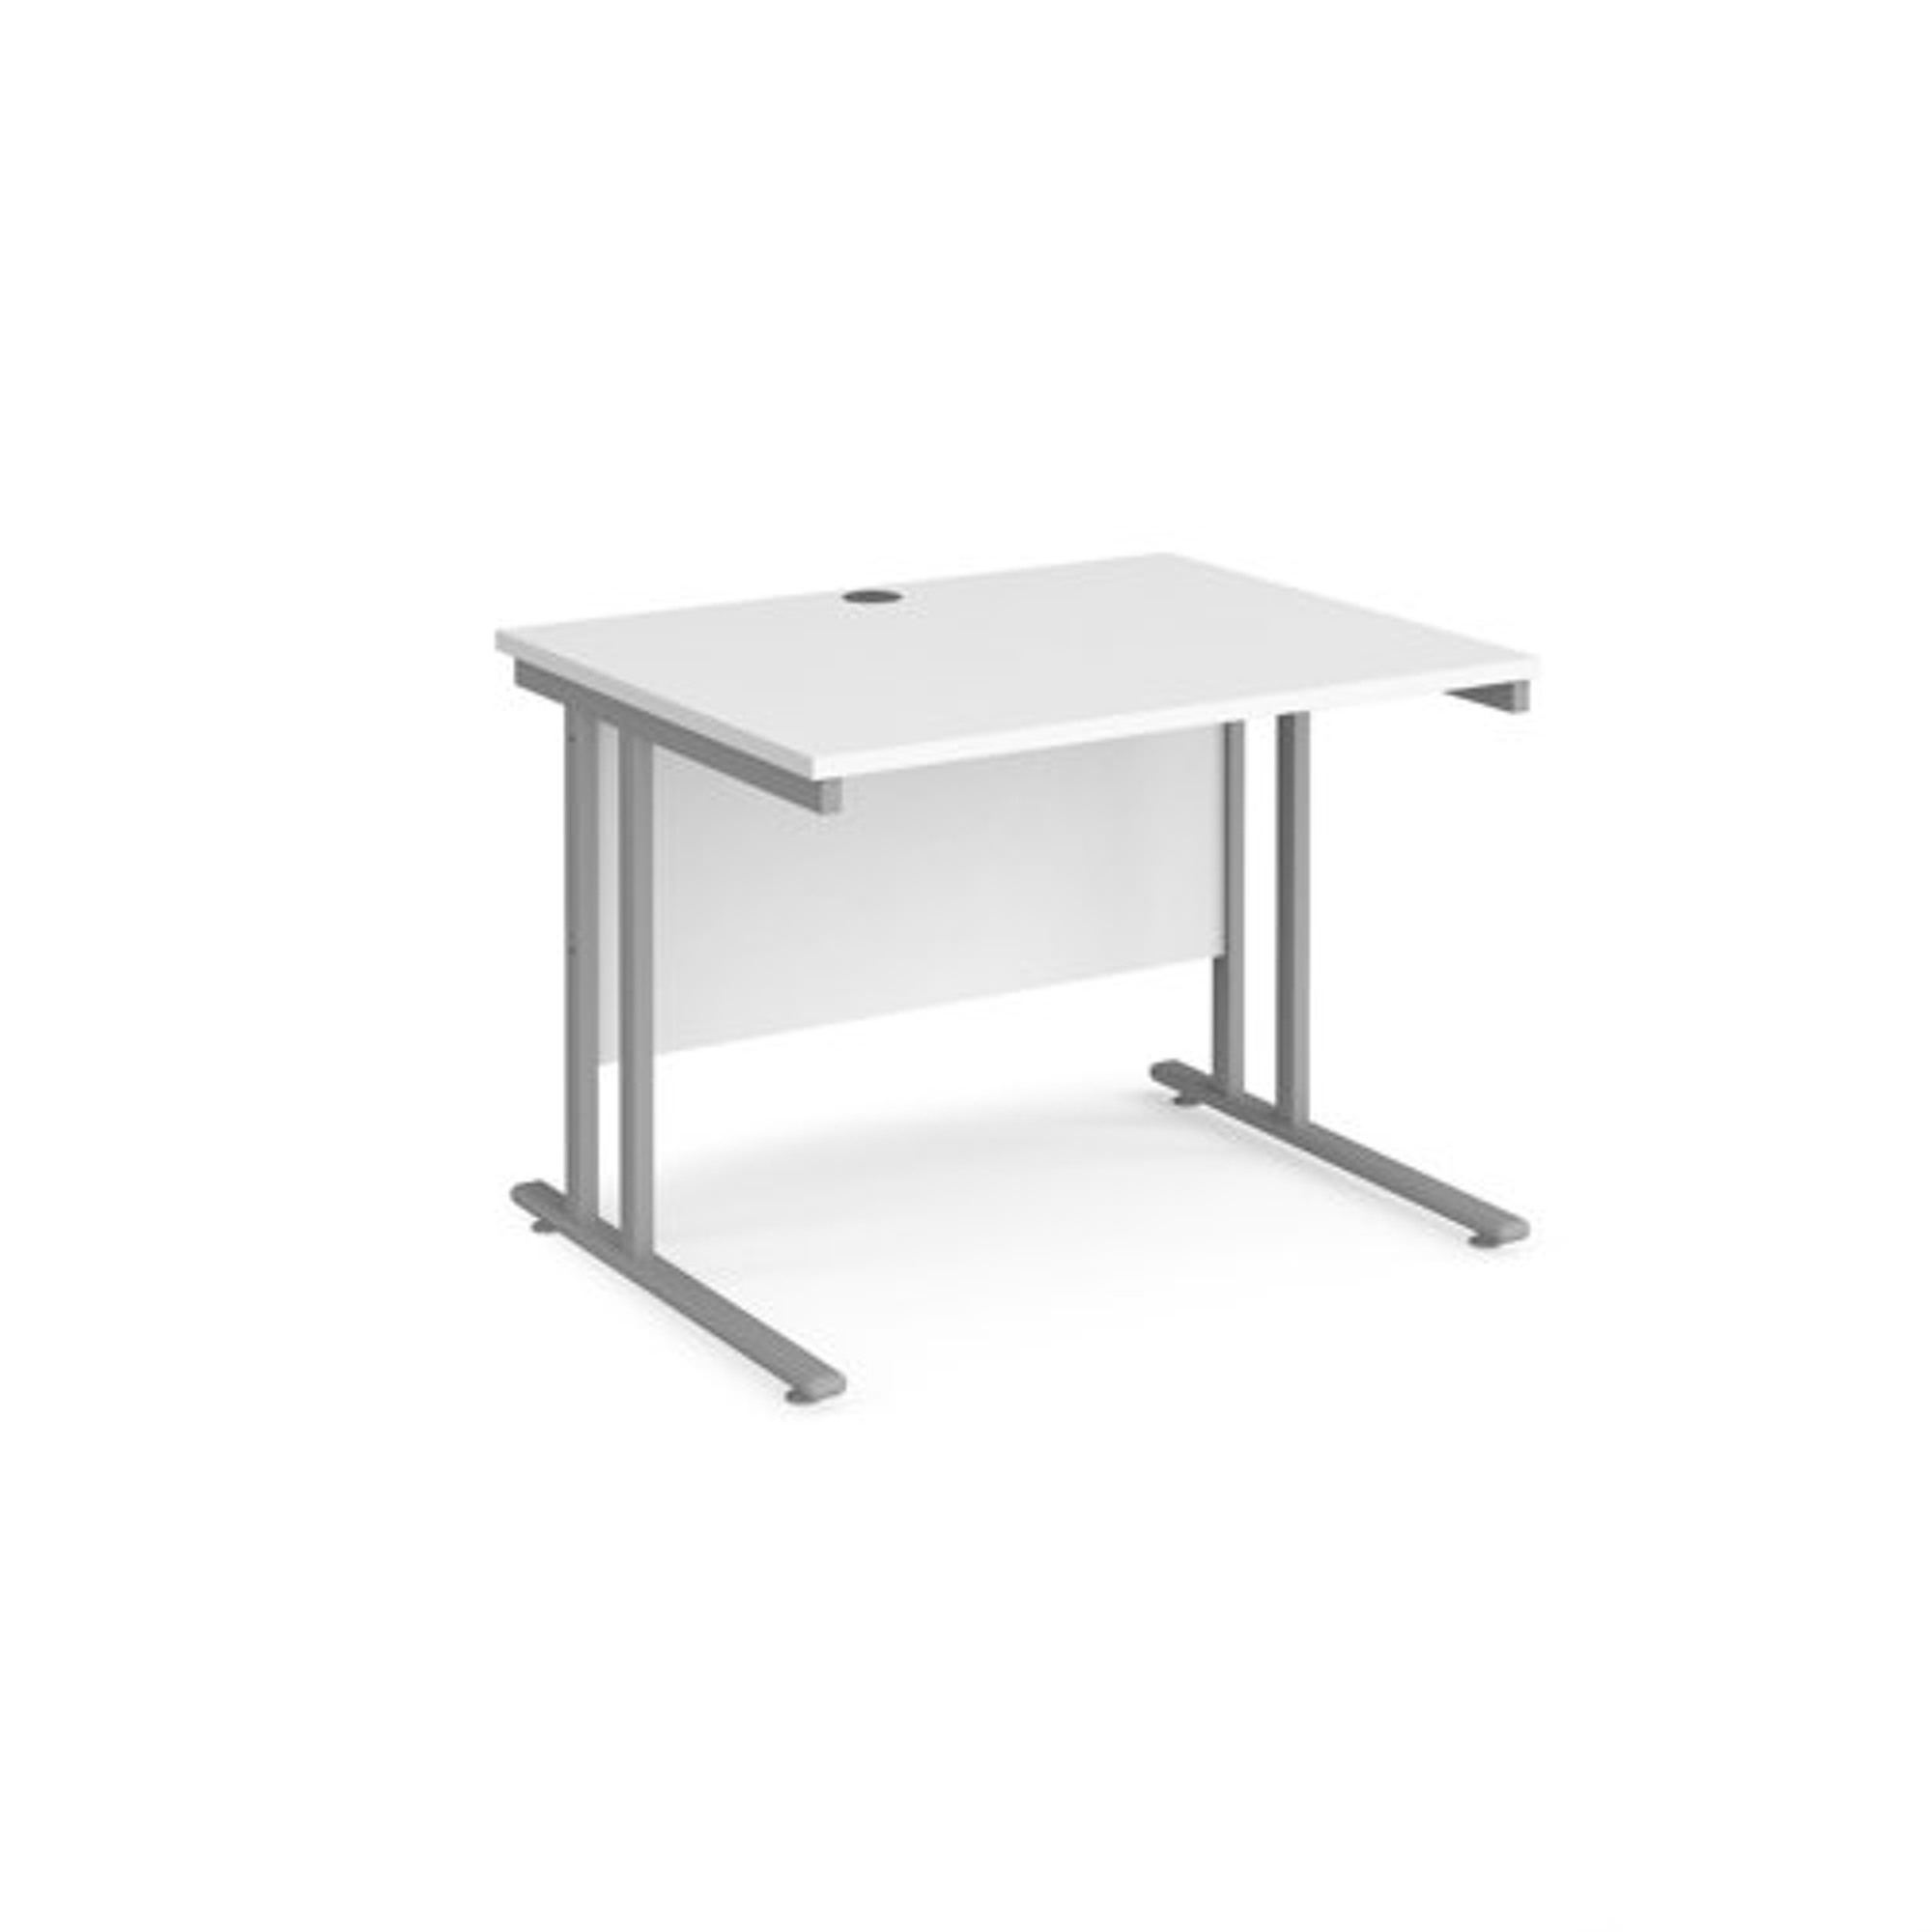 Maestro+25+straight+desk+1000mm+x+800mm+-+silver+cantilever+leg+frame%2C+white+top